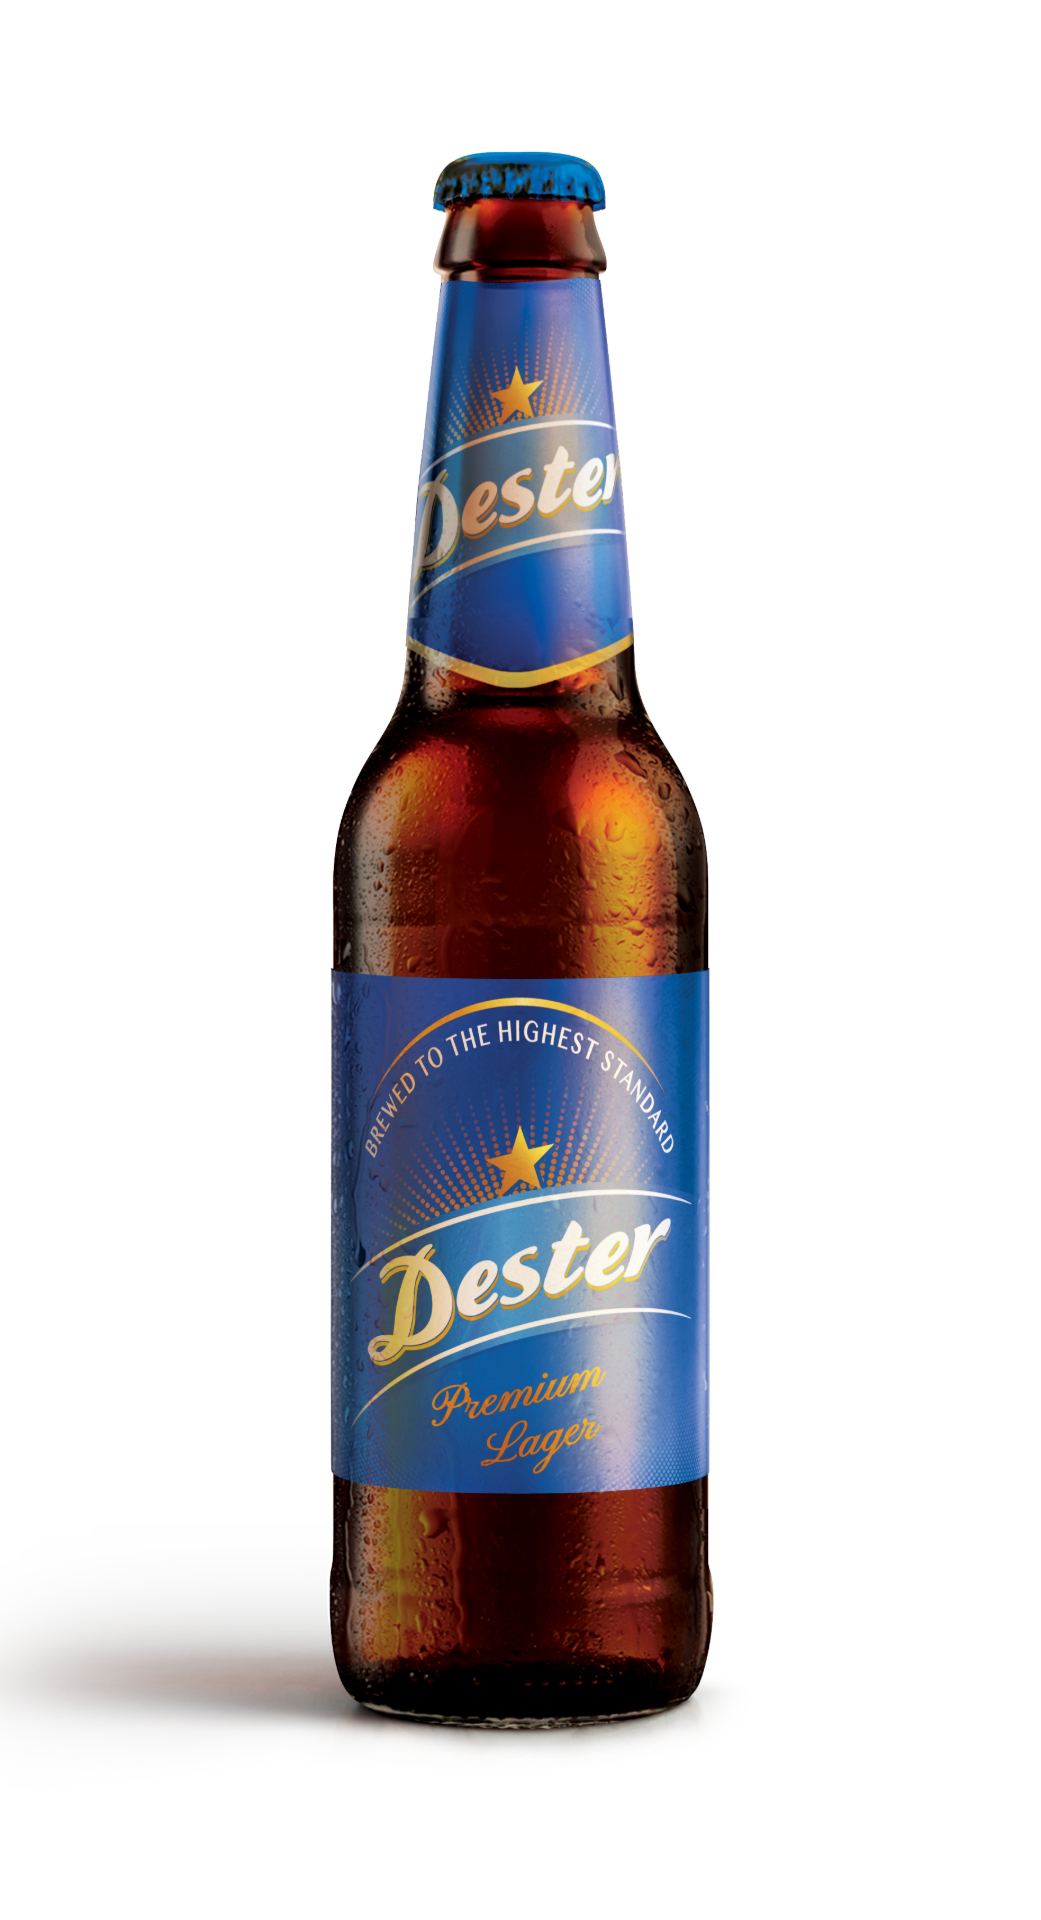 12 bottles of Dester Premium Lager Beer